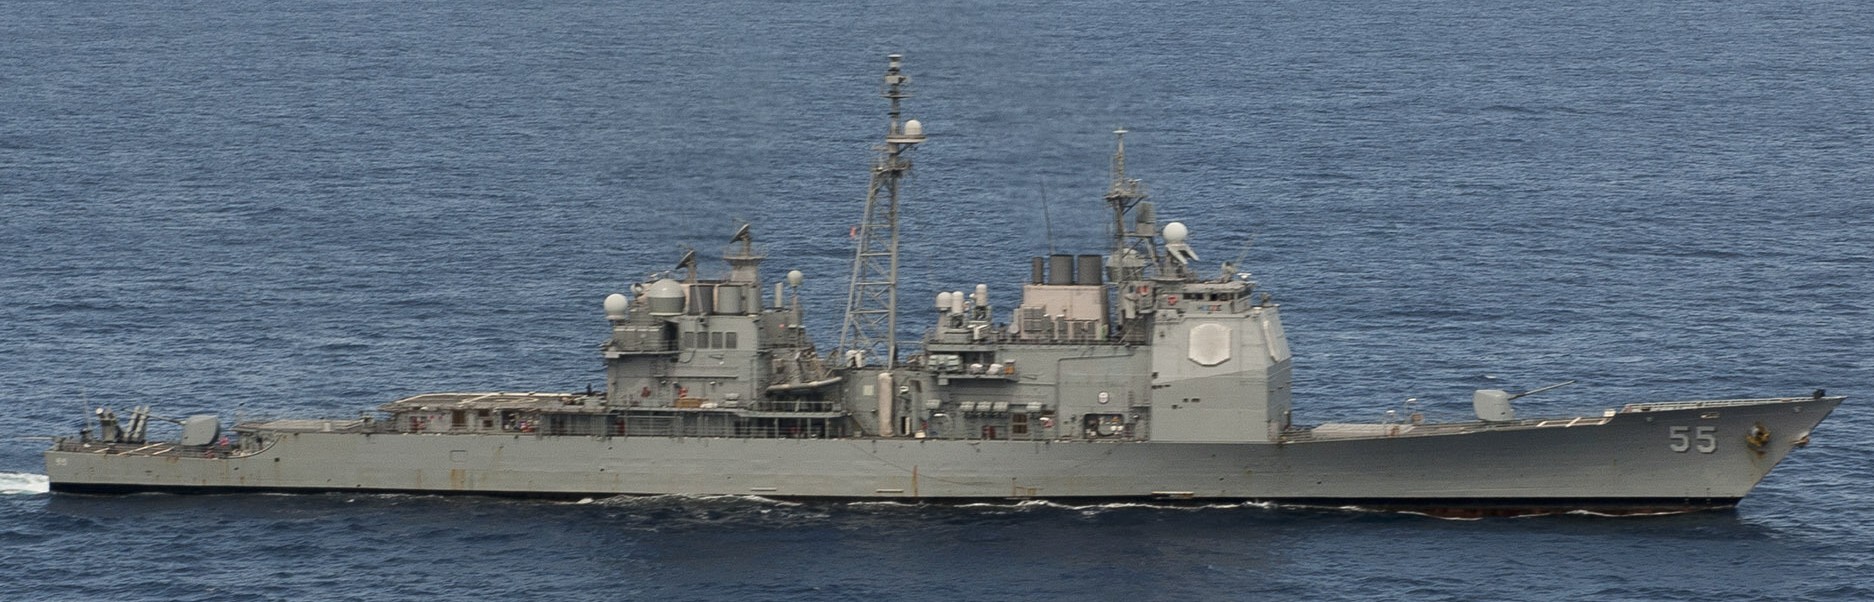 cg-55 uss leyte gulf ticonderoga class guided missile cruiser aegis us navy 44